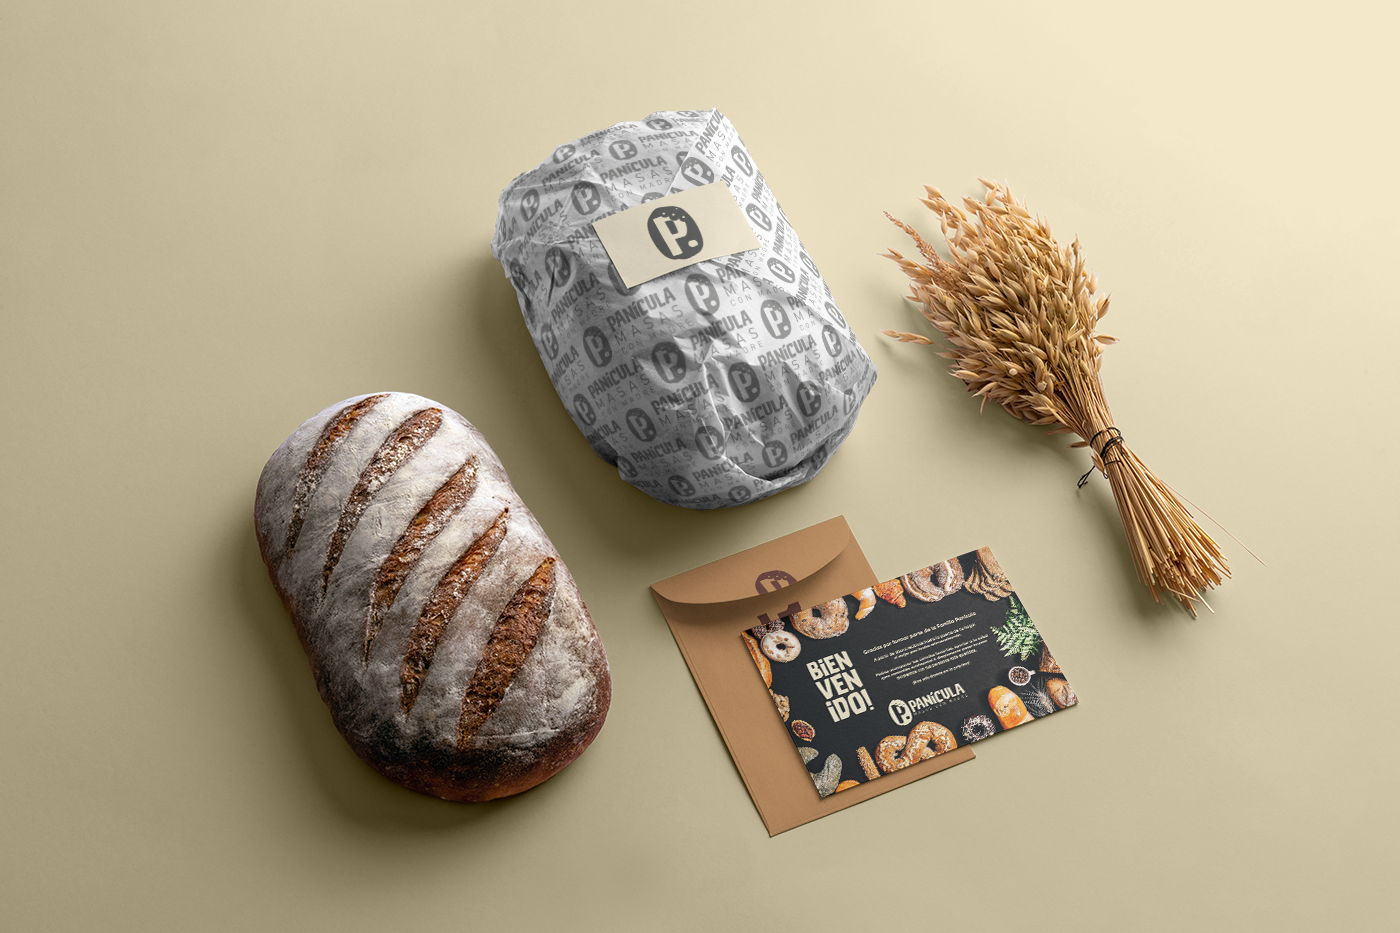 bakery bakery branding branding  bread Pan visual identity